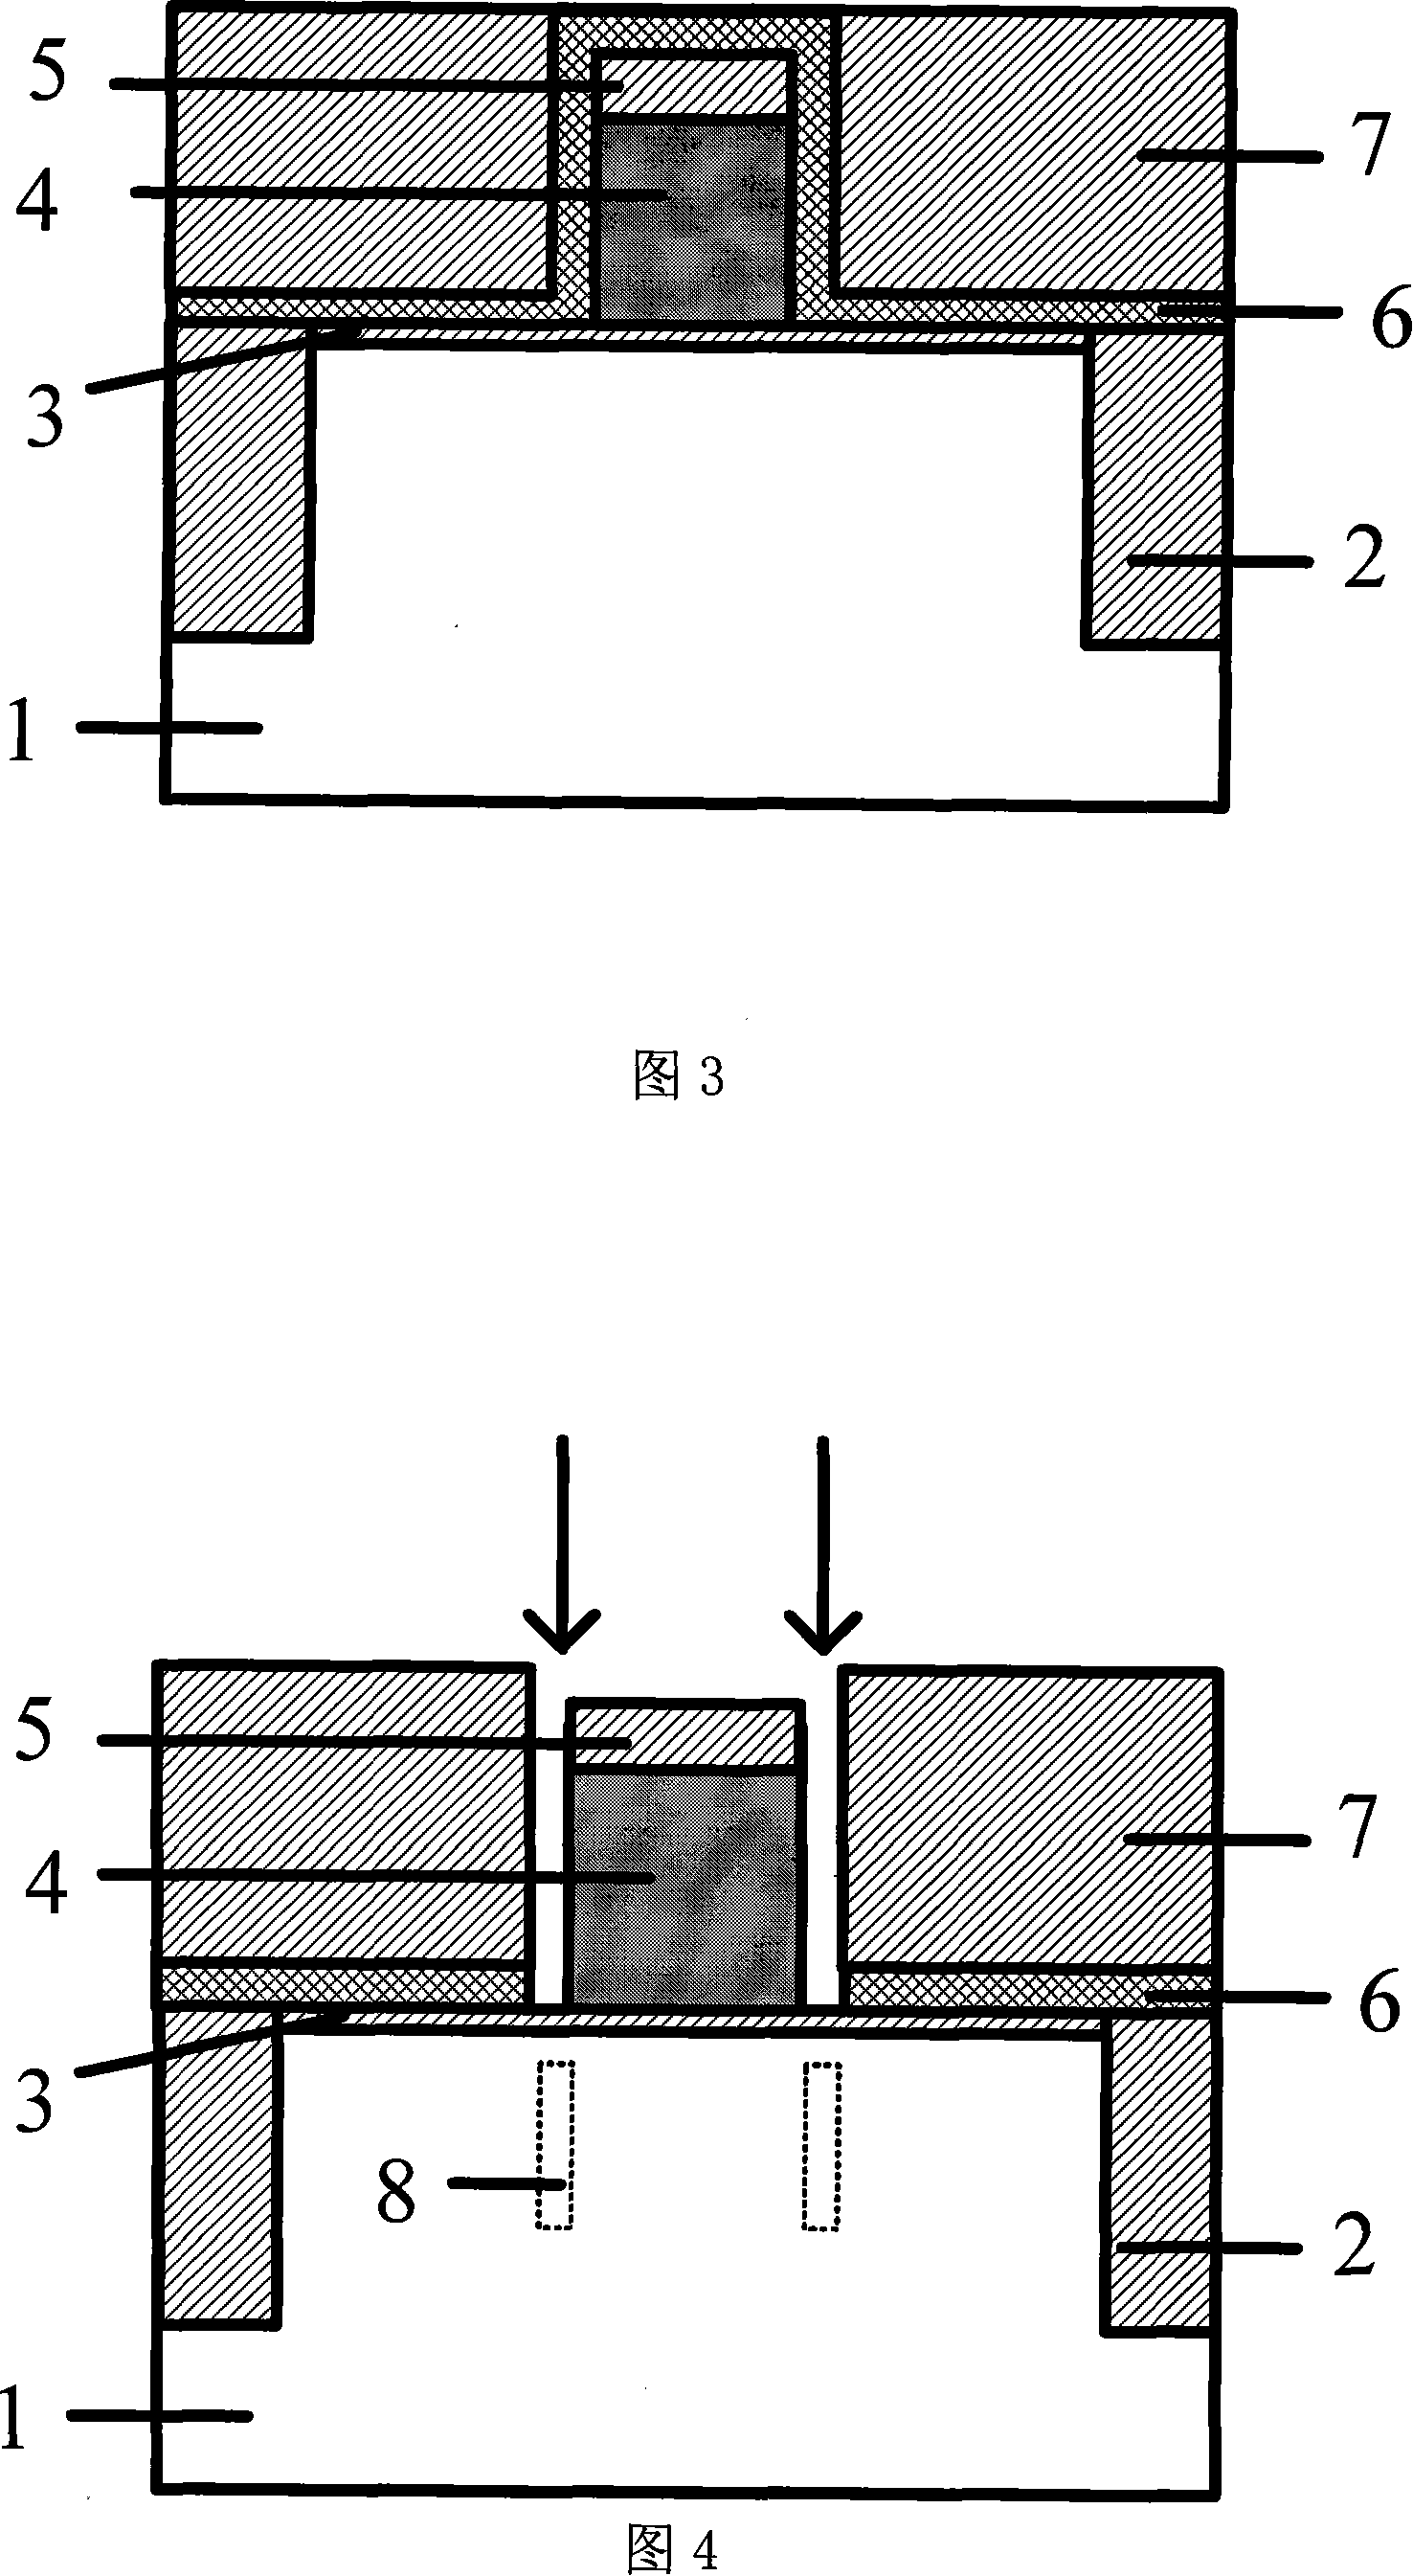 Adulation method for MOS transistor body area